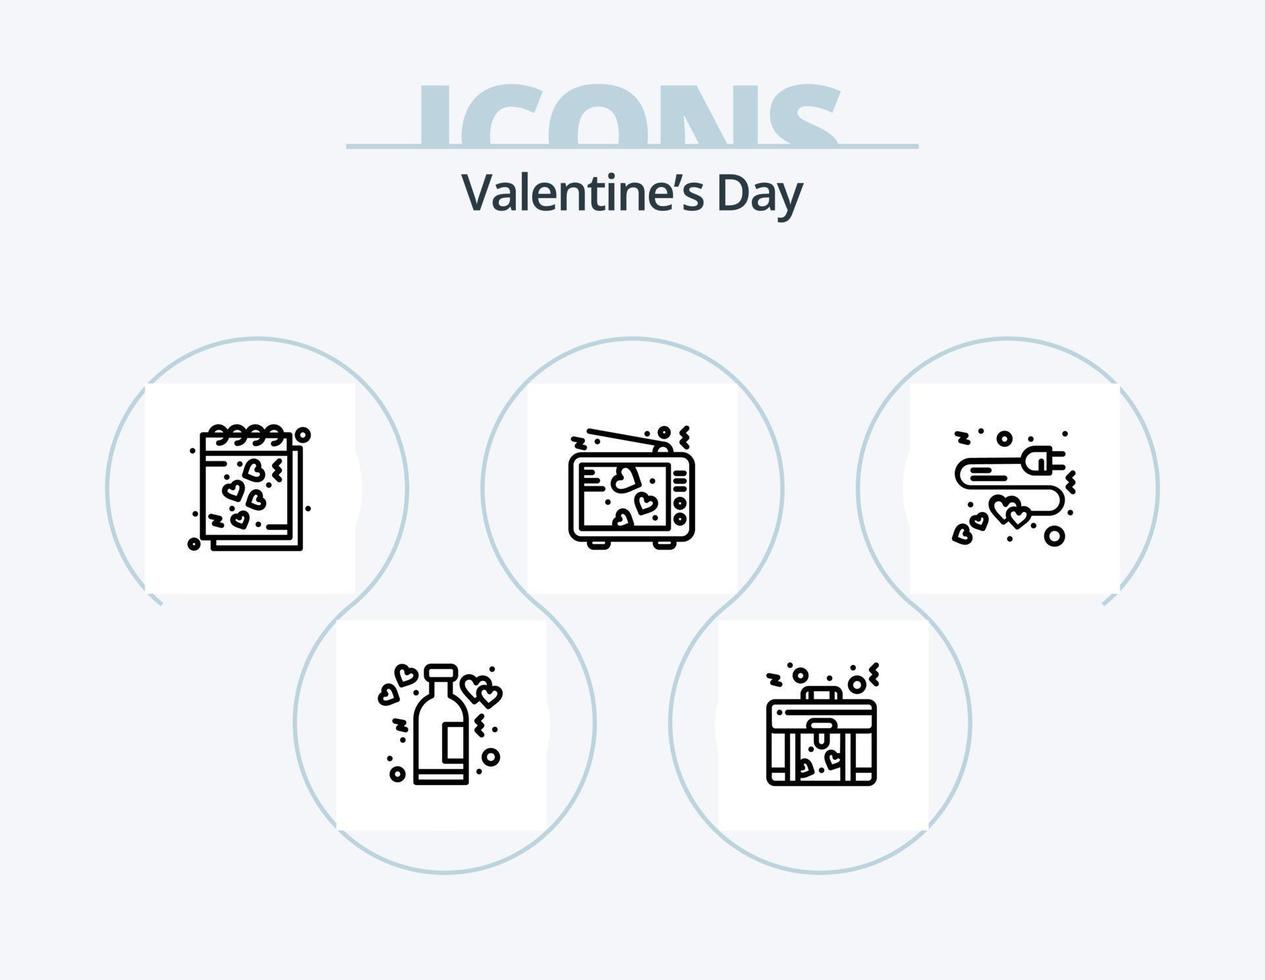 valentines dag linje ikon packa 5 ikon design. band. hälsa. tv. donation. kärlek vektor